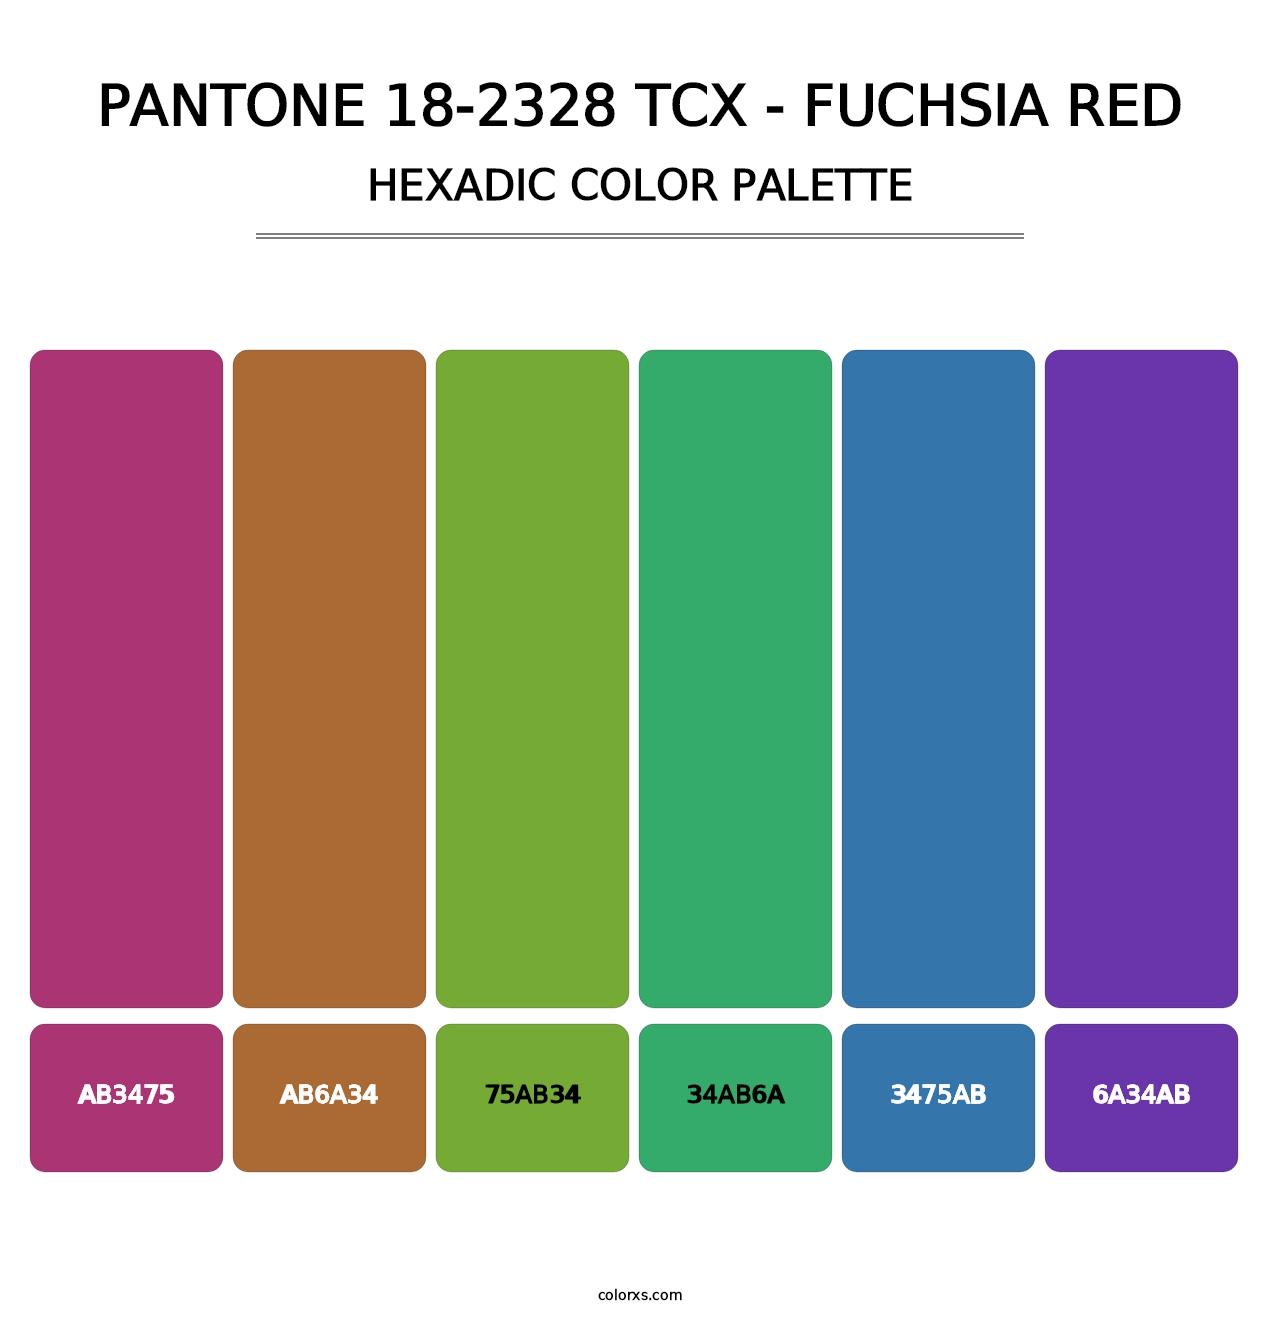 PANTONE 18-2328 TCX - Fuchsia Red - Hexadic Color Palette